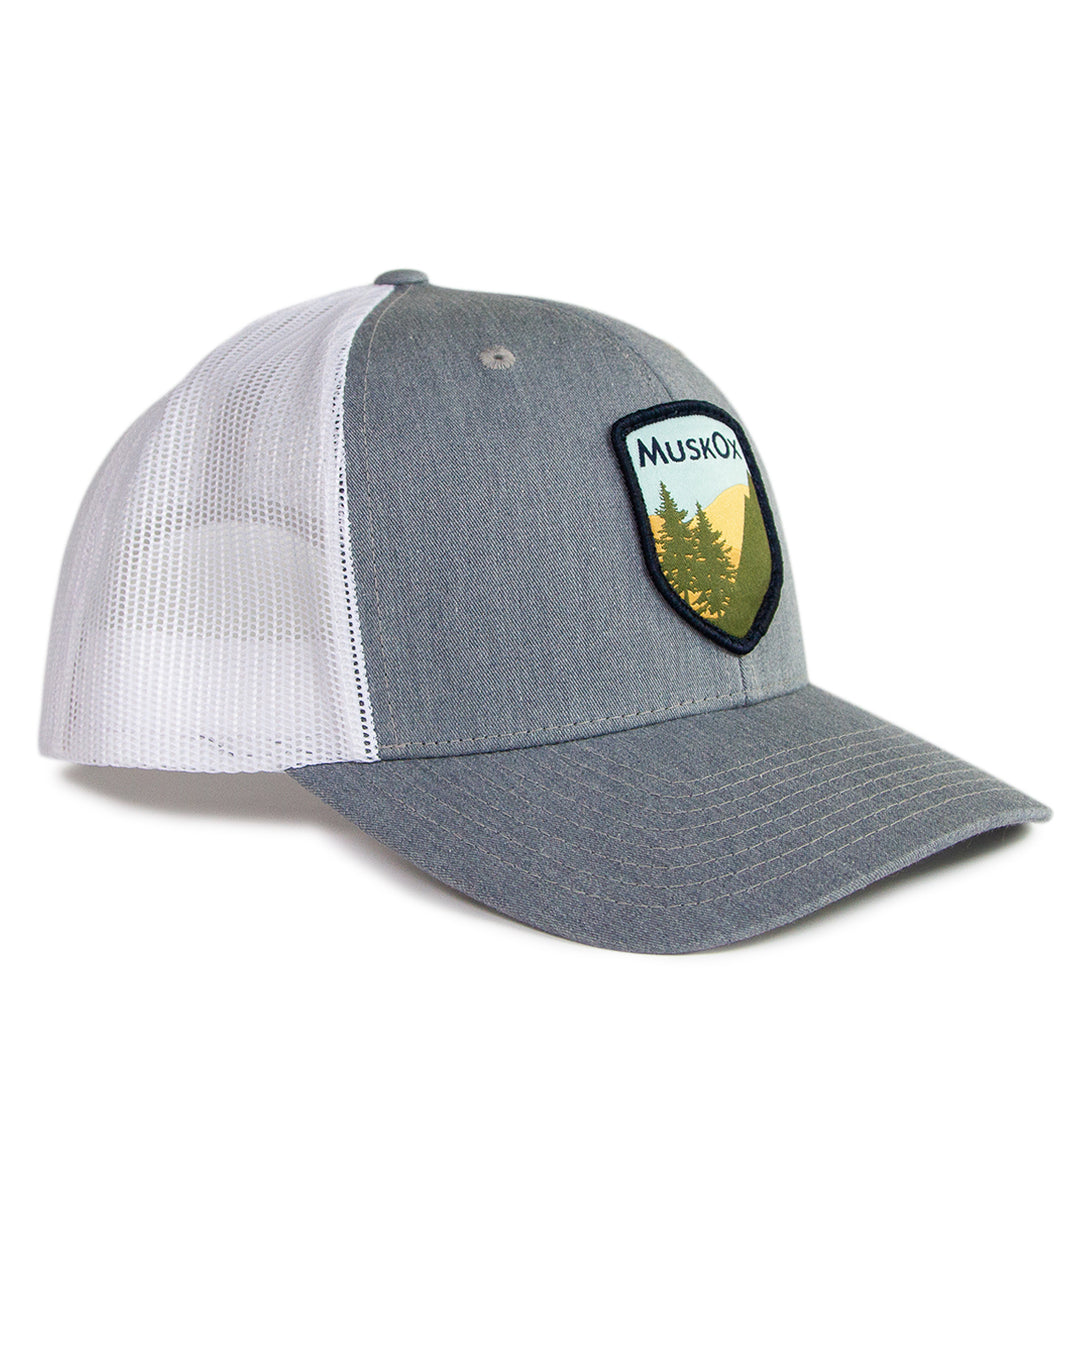 MuskOx Outdoor Apparel Patch Adjustable Trucker Hat in Grey